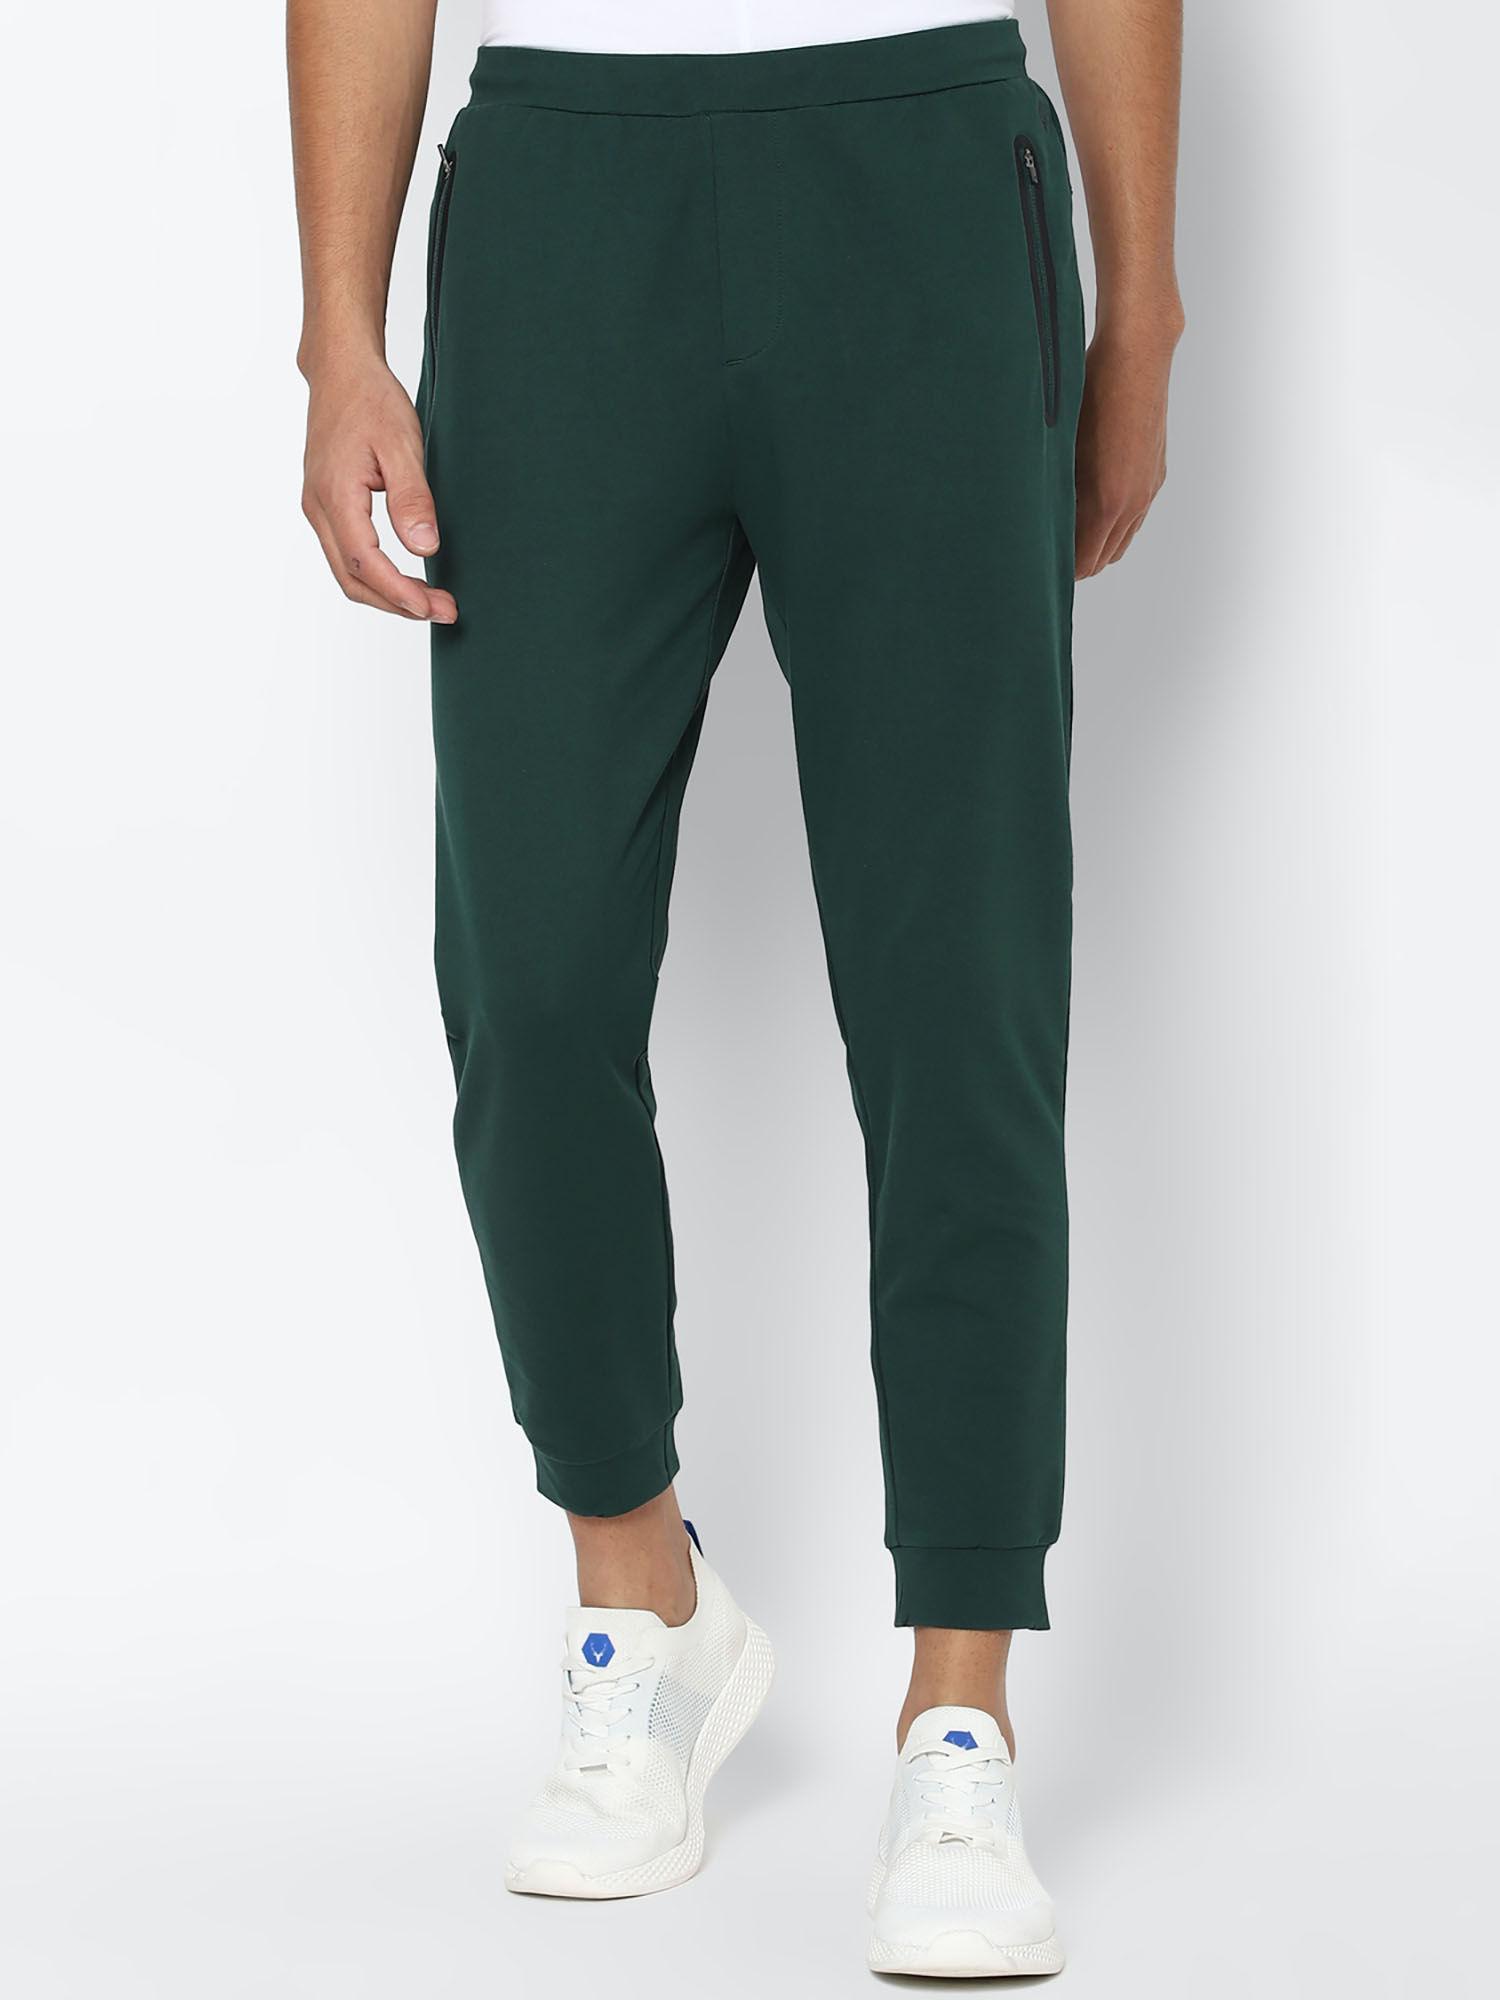 green jogger pants